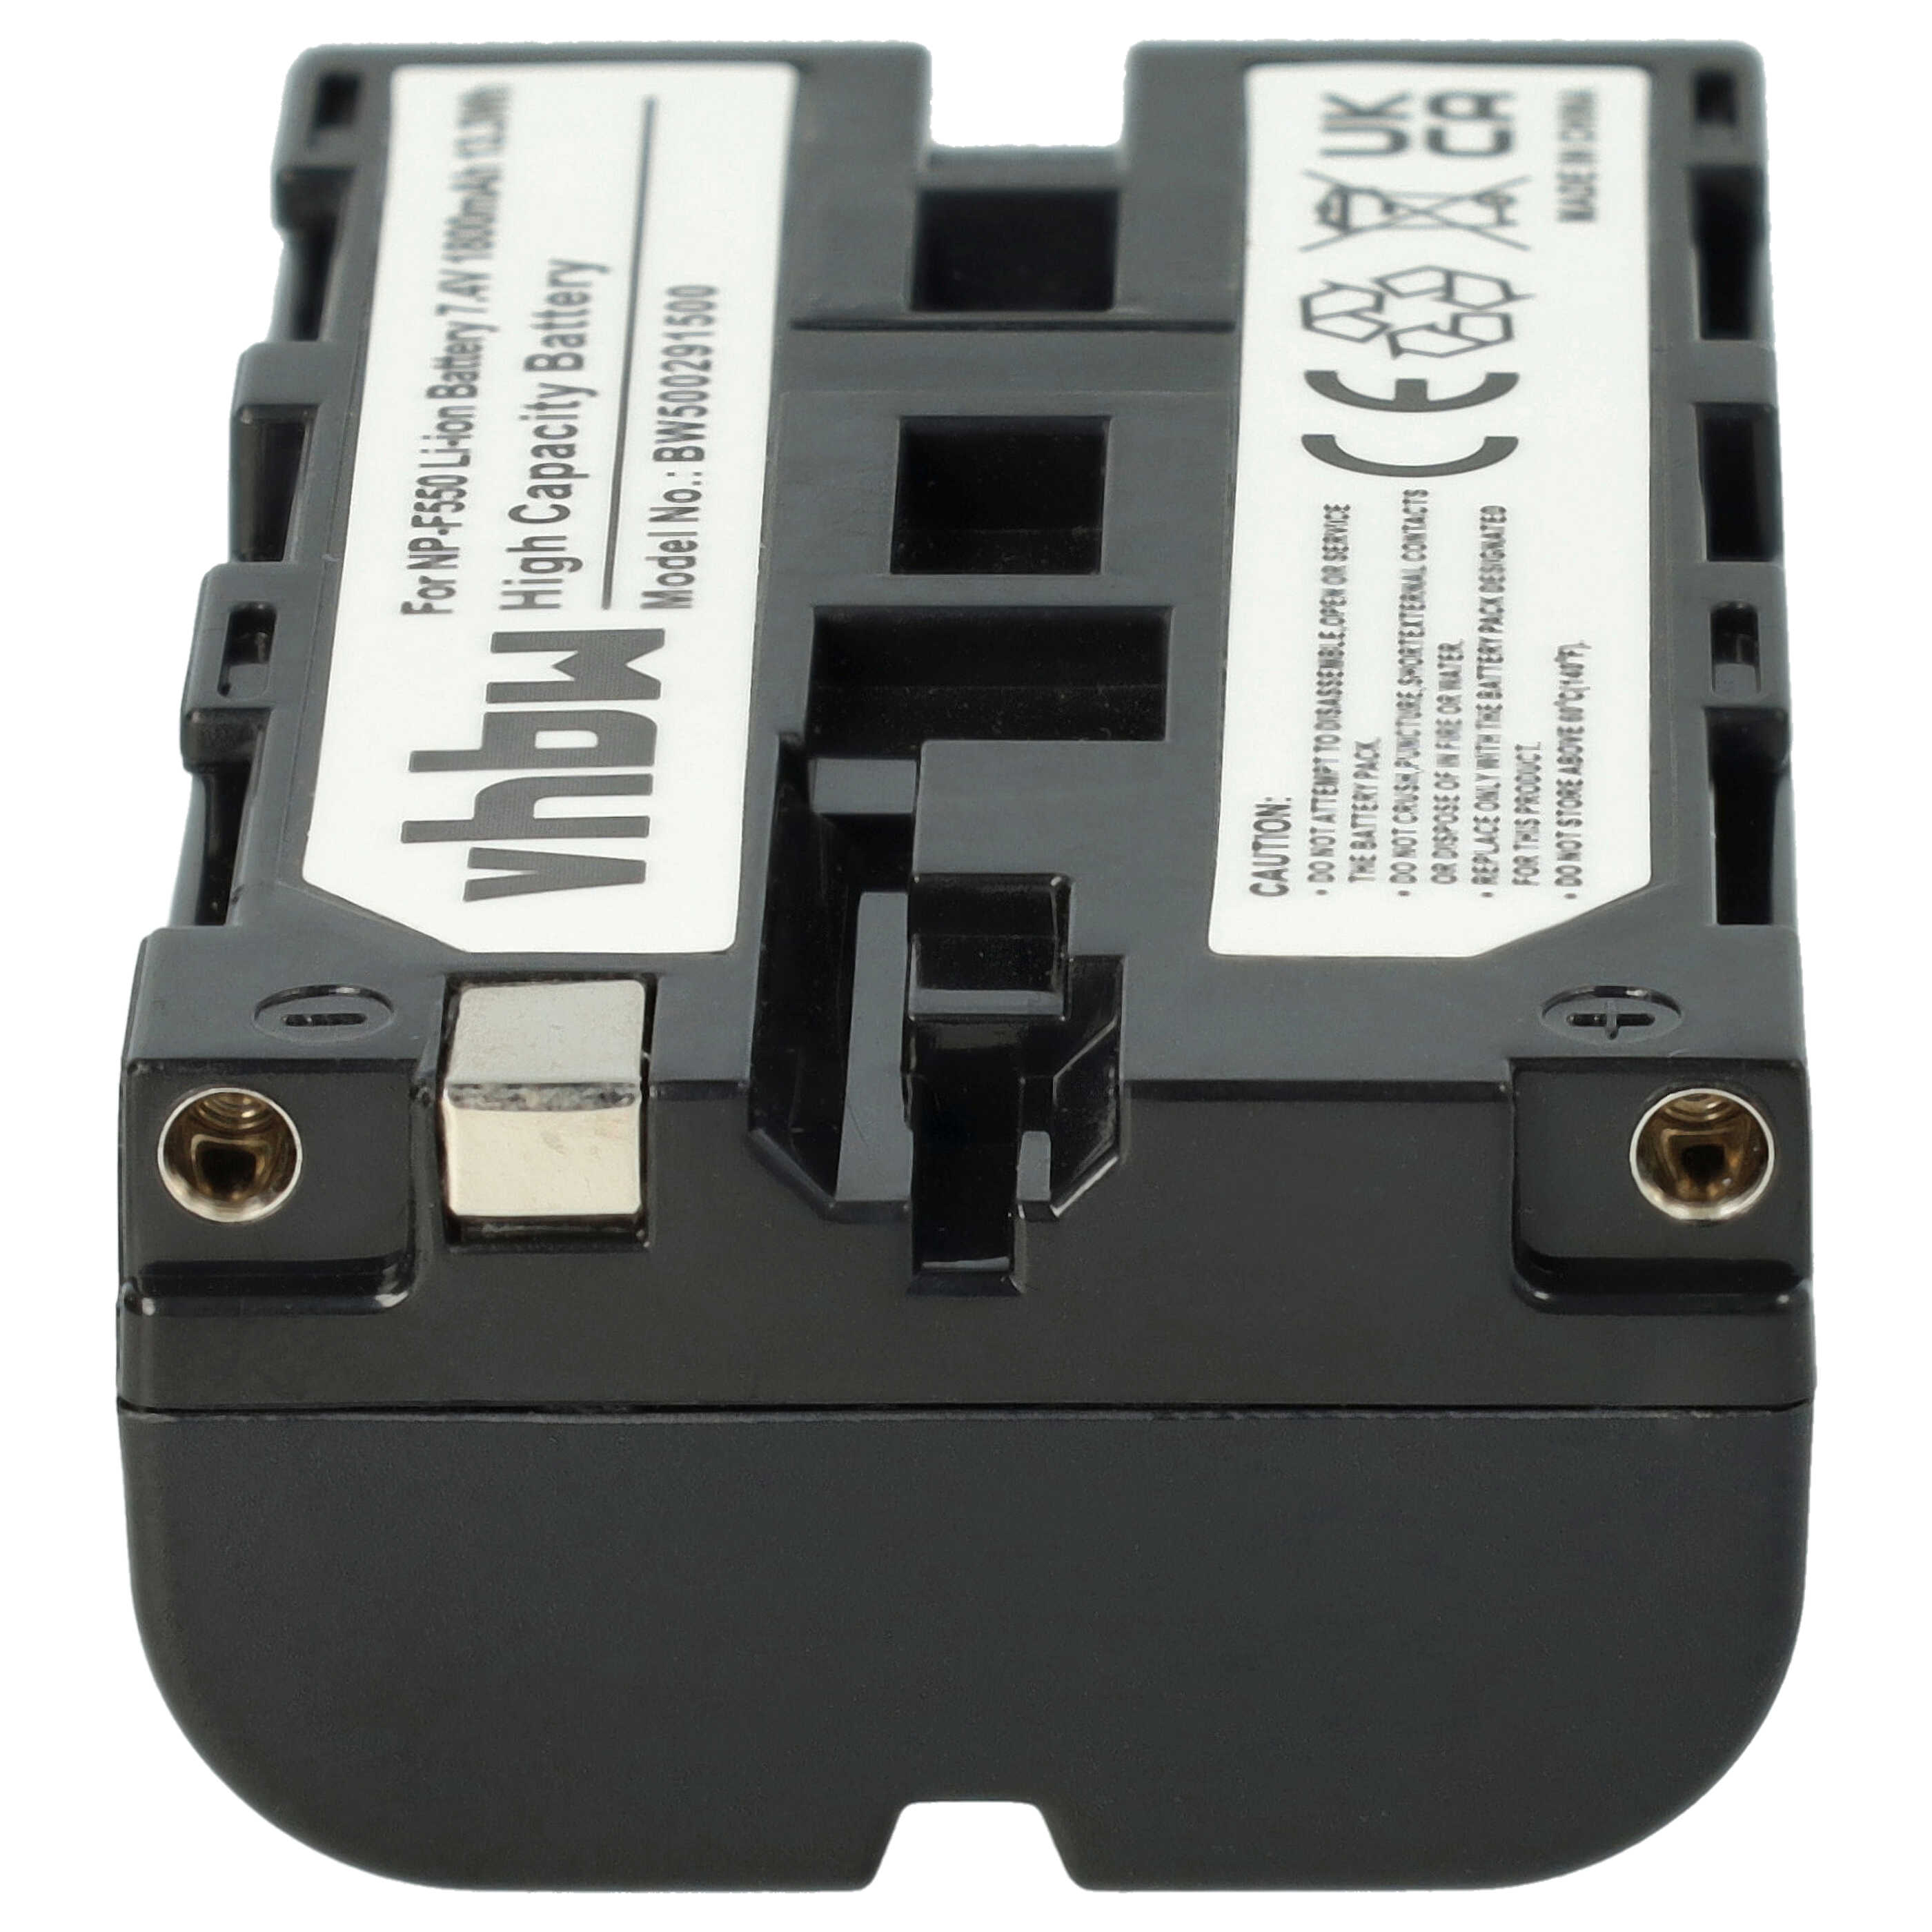 Akumulator do kamery cyfrowej / wideo zamiennik Grundig BP-9, BP-8, BP-10 - 1800 mAh 7,2 V Li-Ion